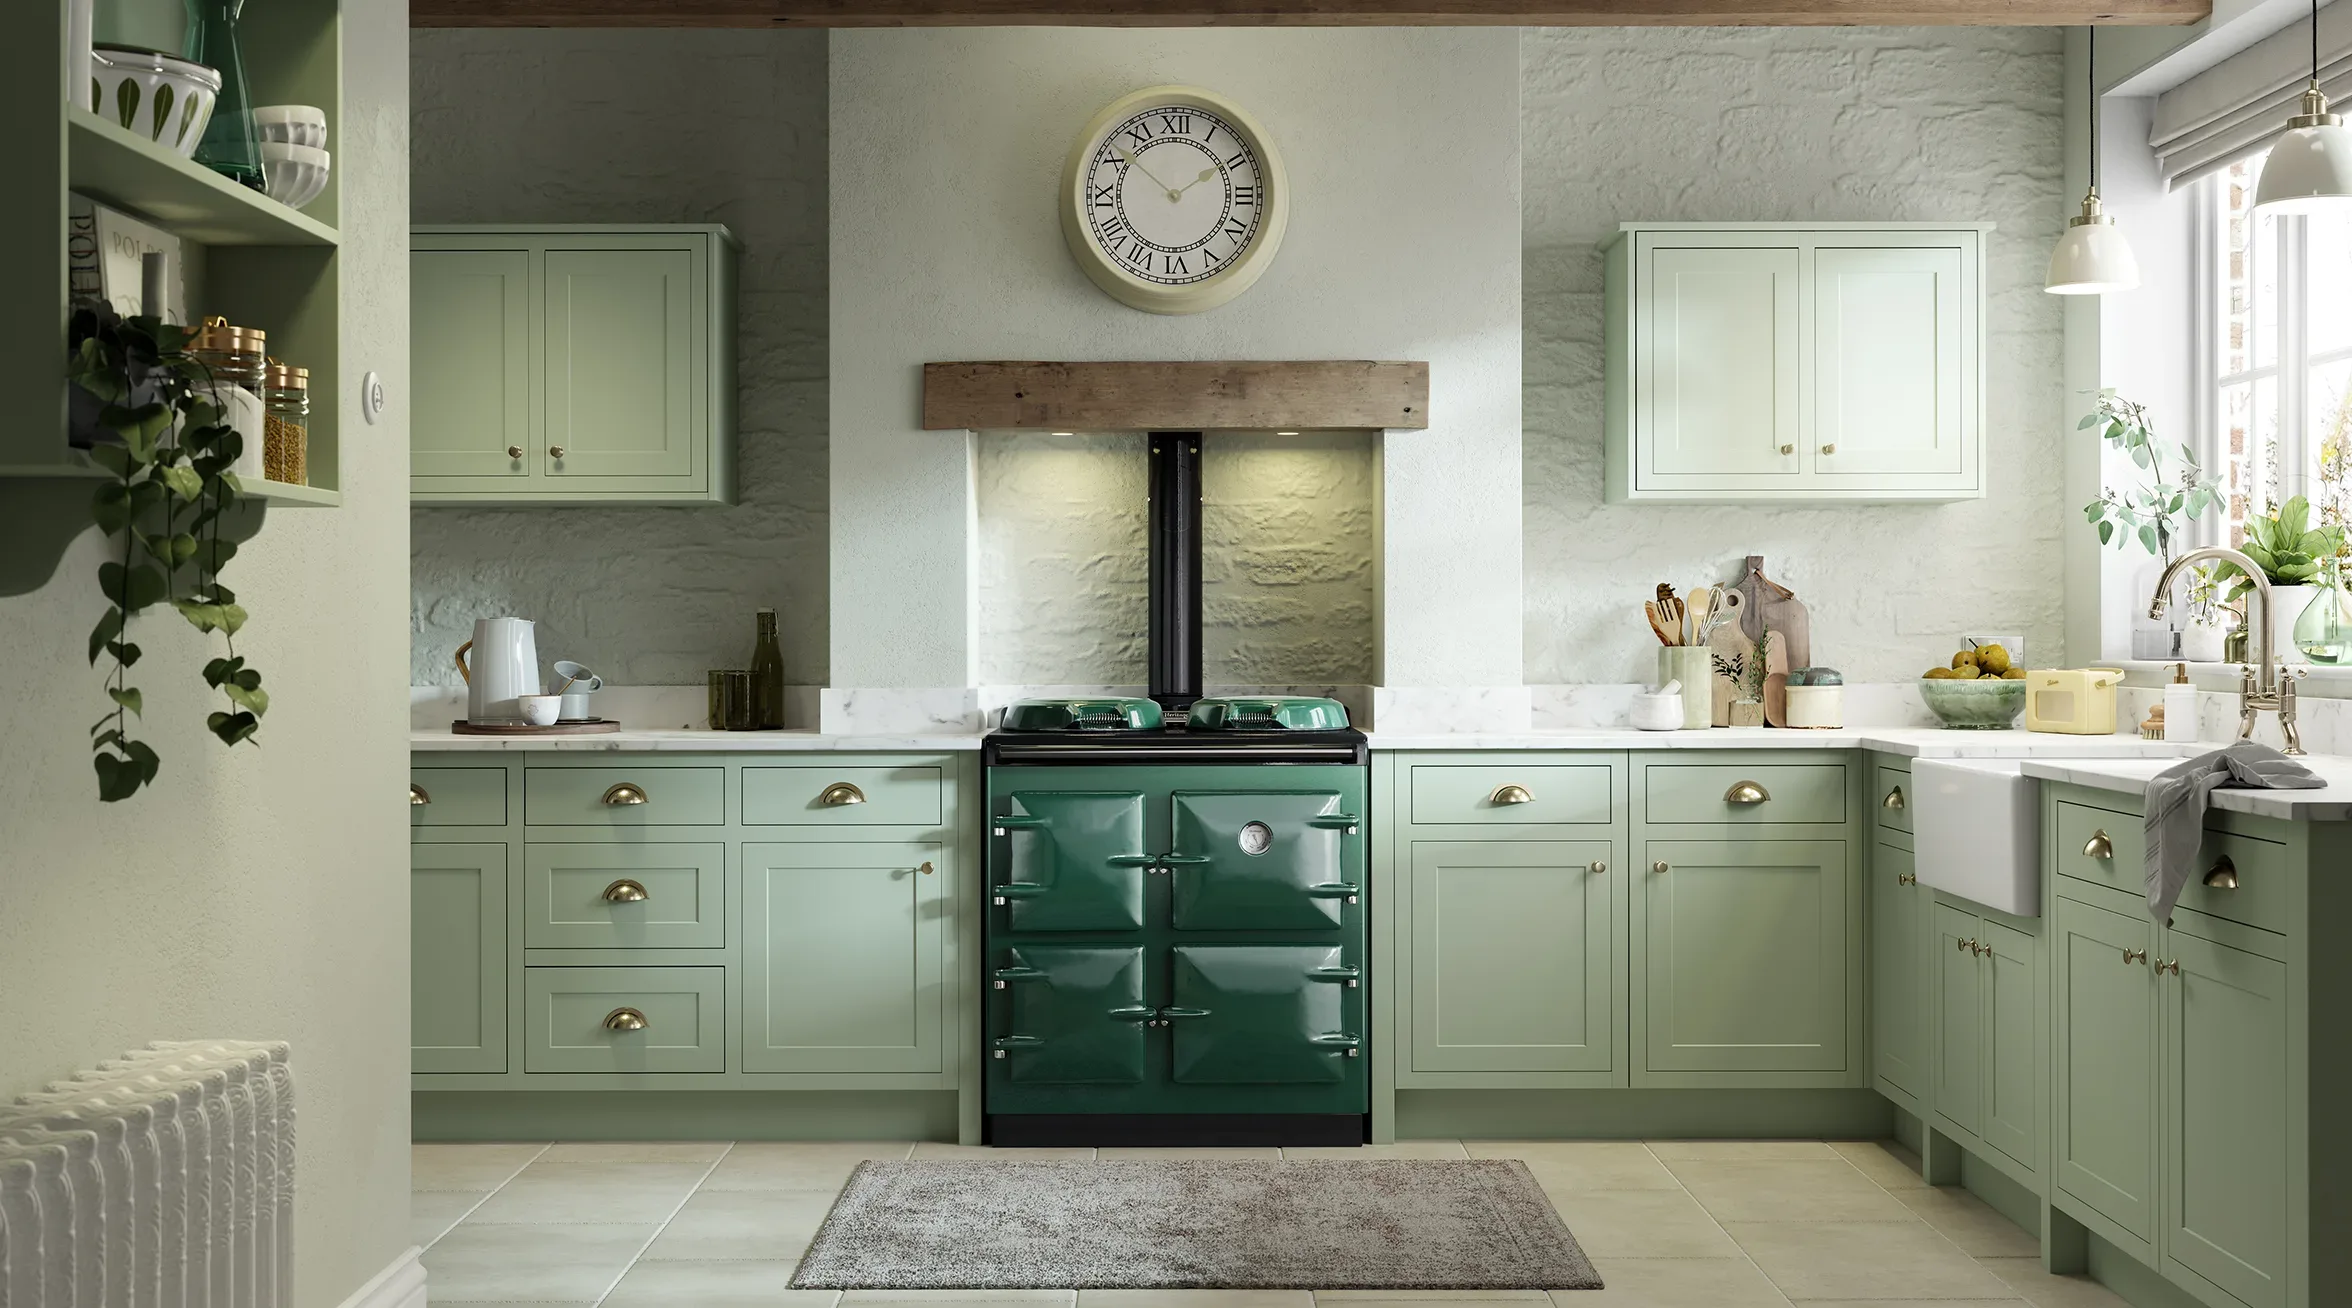 Heritage Standard Range Cooker in Slate Blue installed in a beautiful ochre coloured farmhouse kitchen